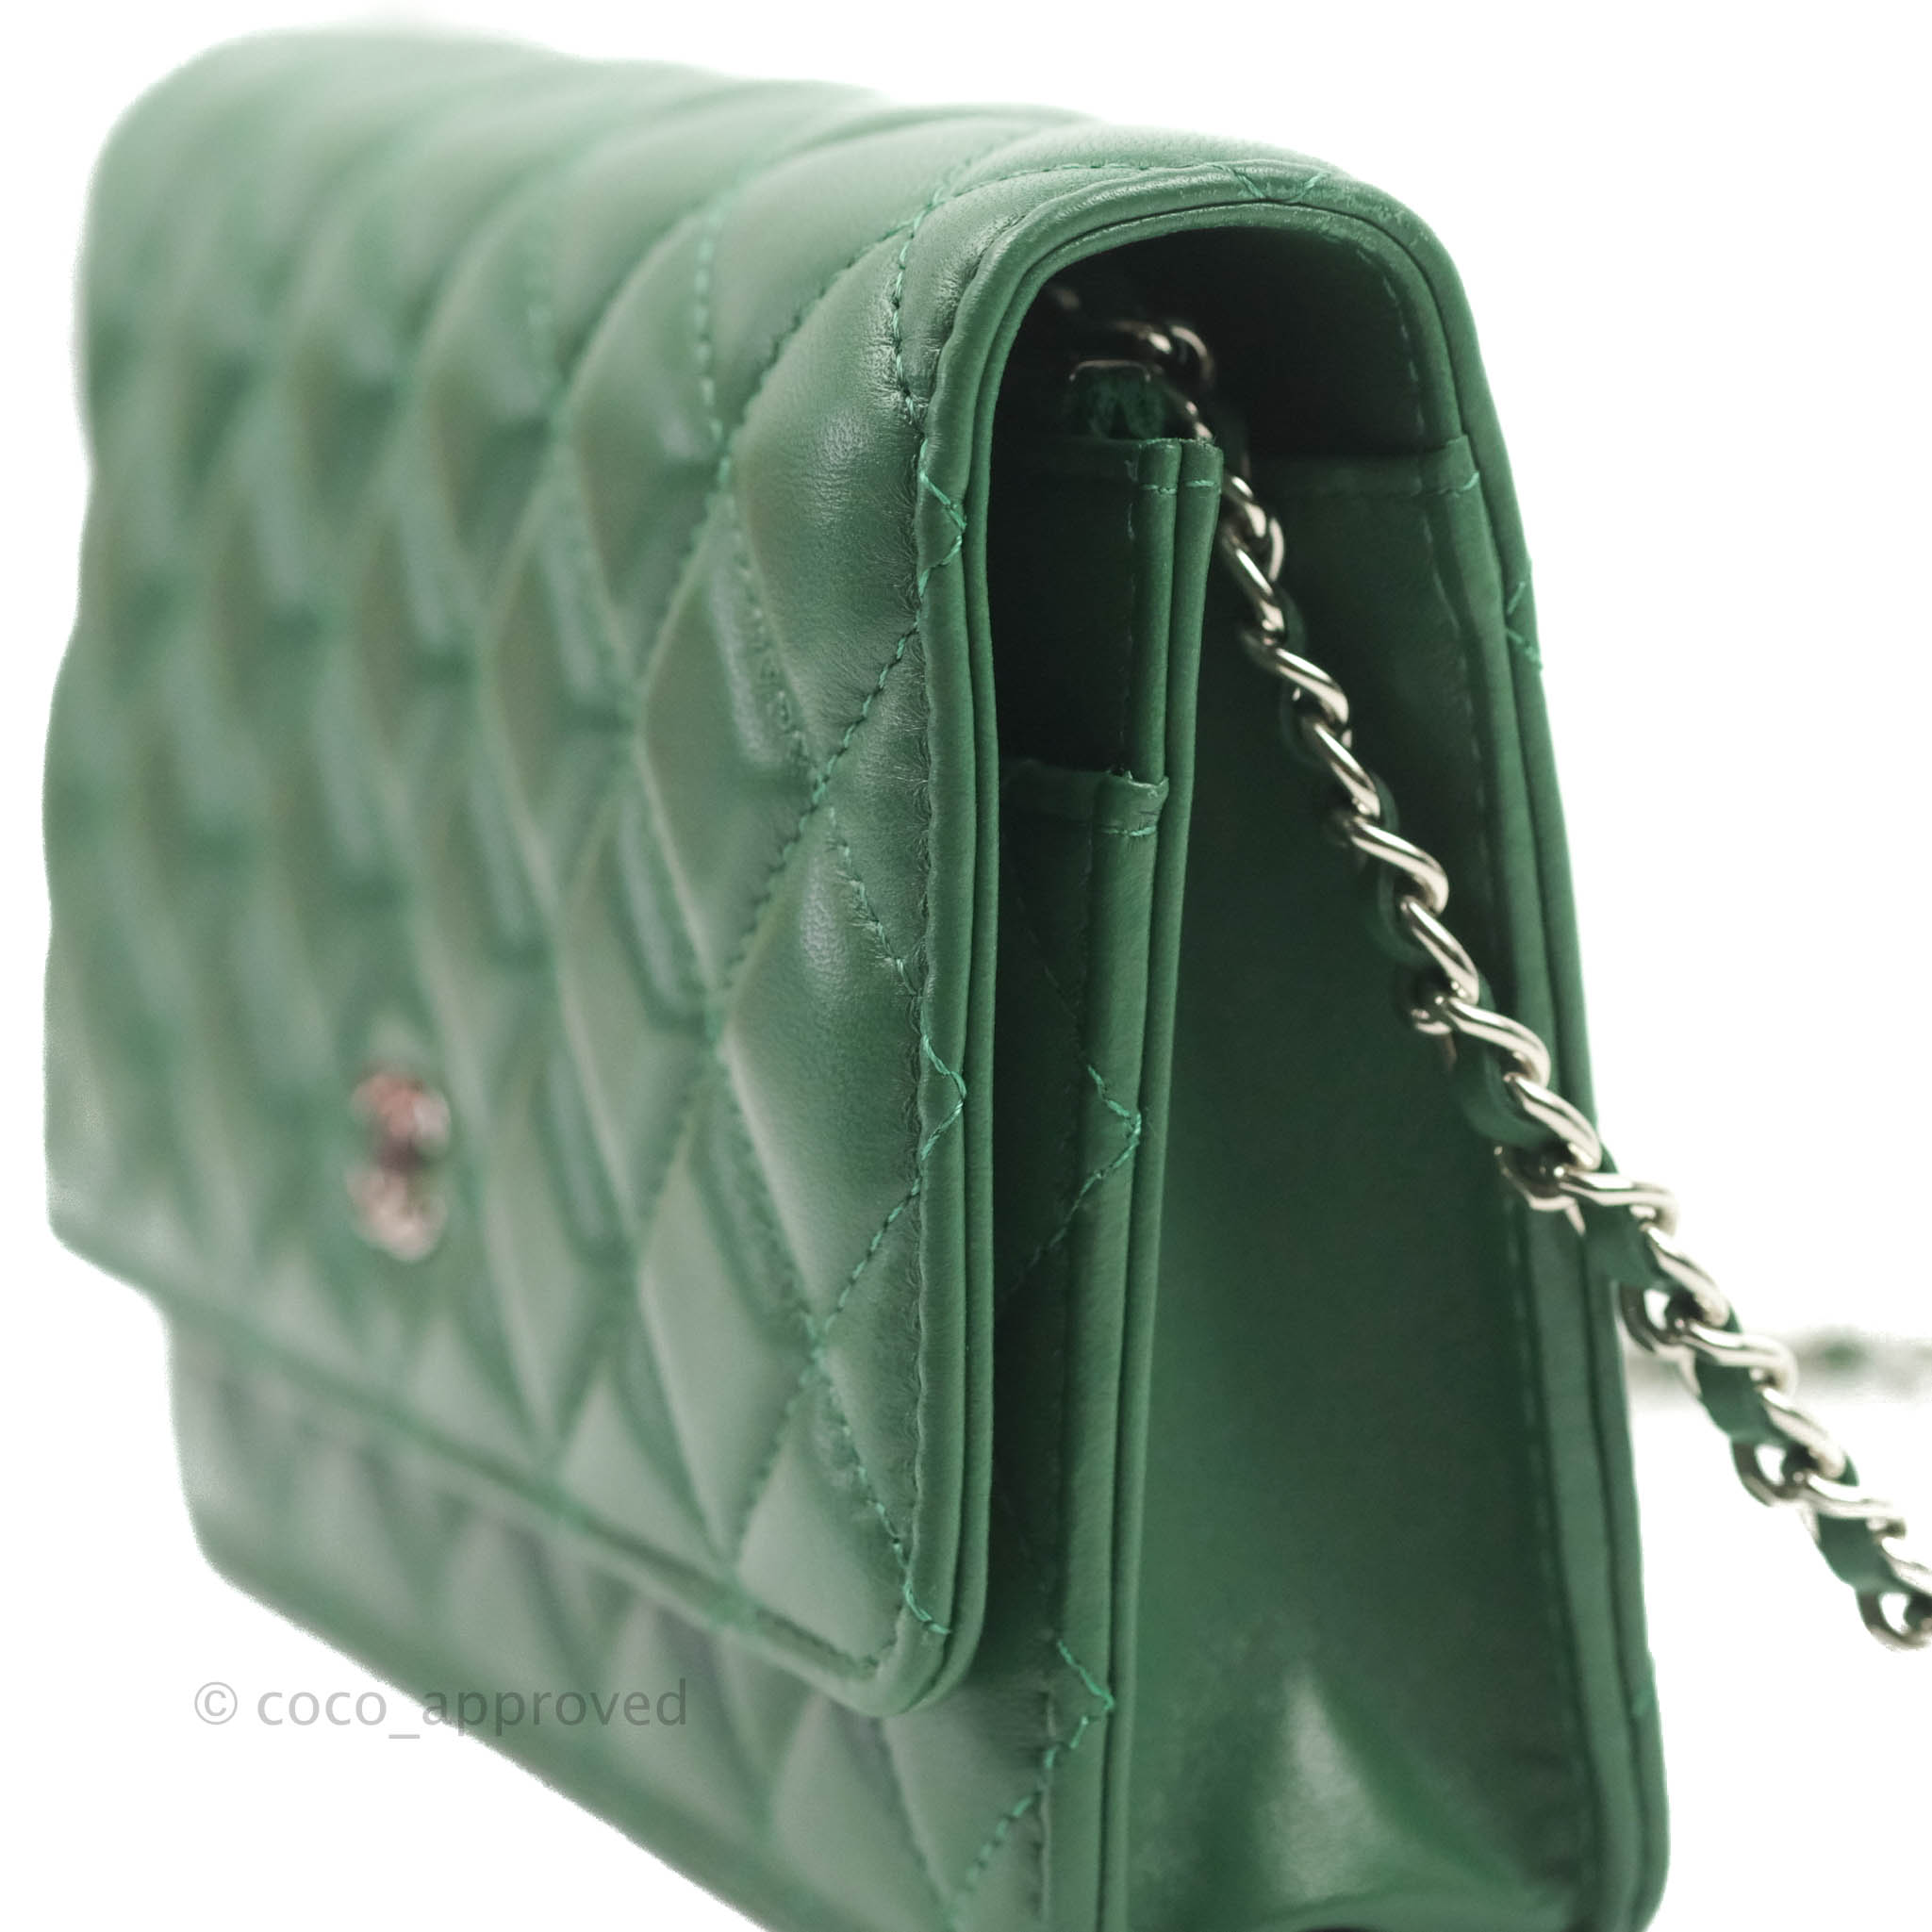 Chanel Lambskin Classic Wallet on Chain Bag, Chanel Handbags